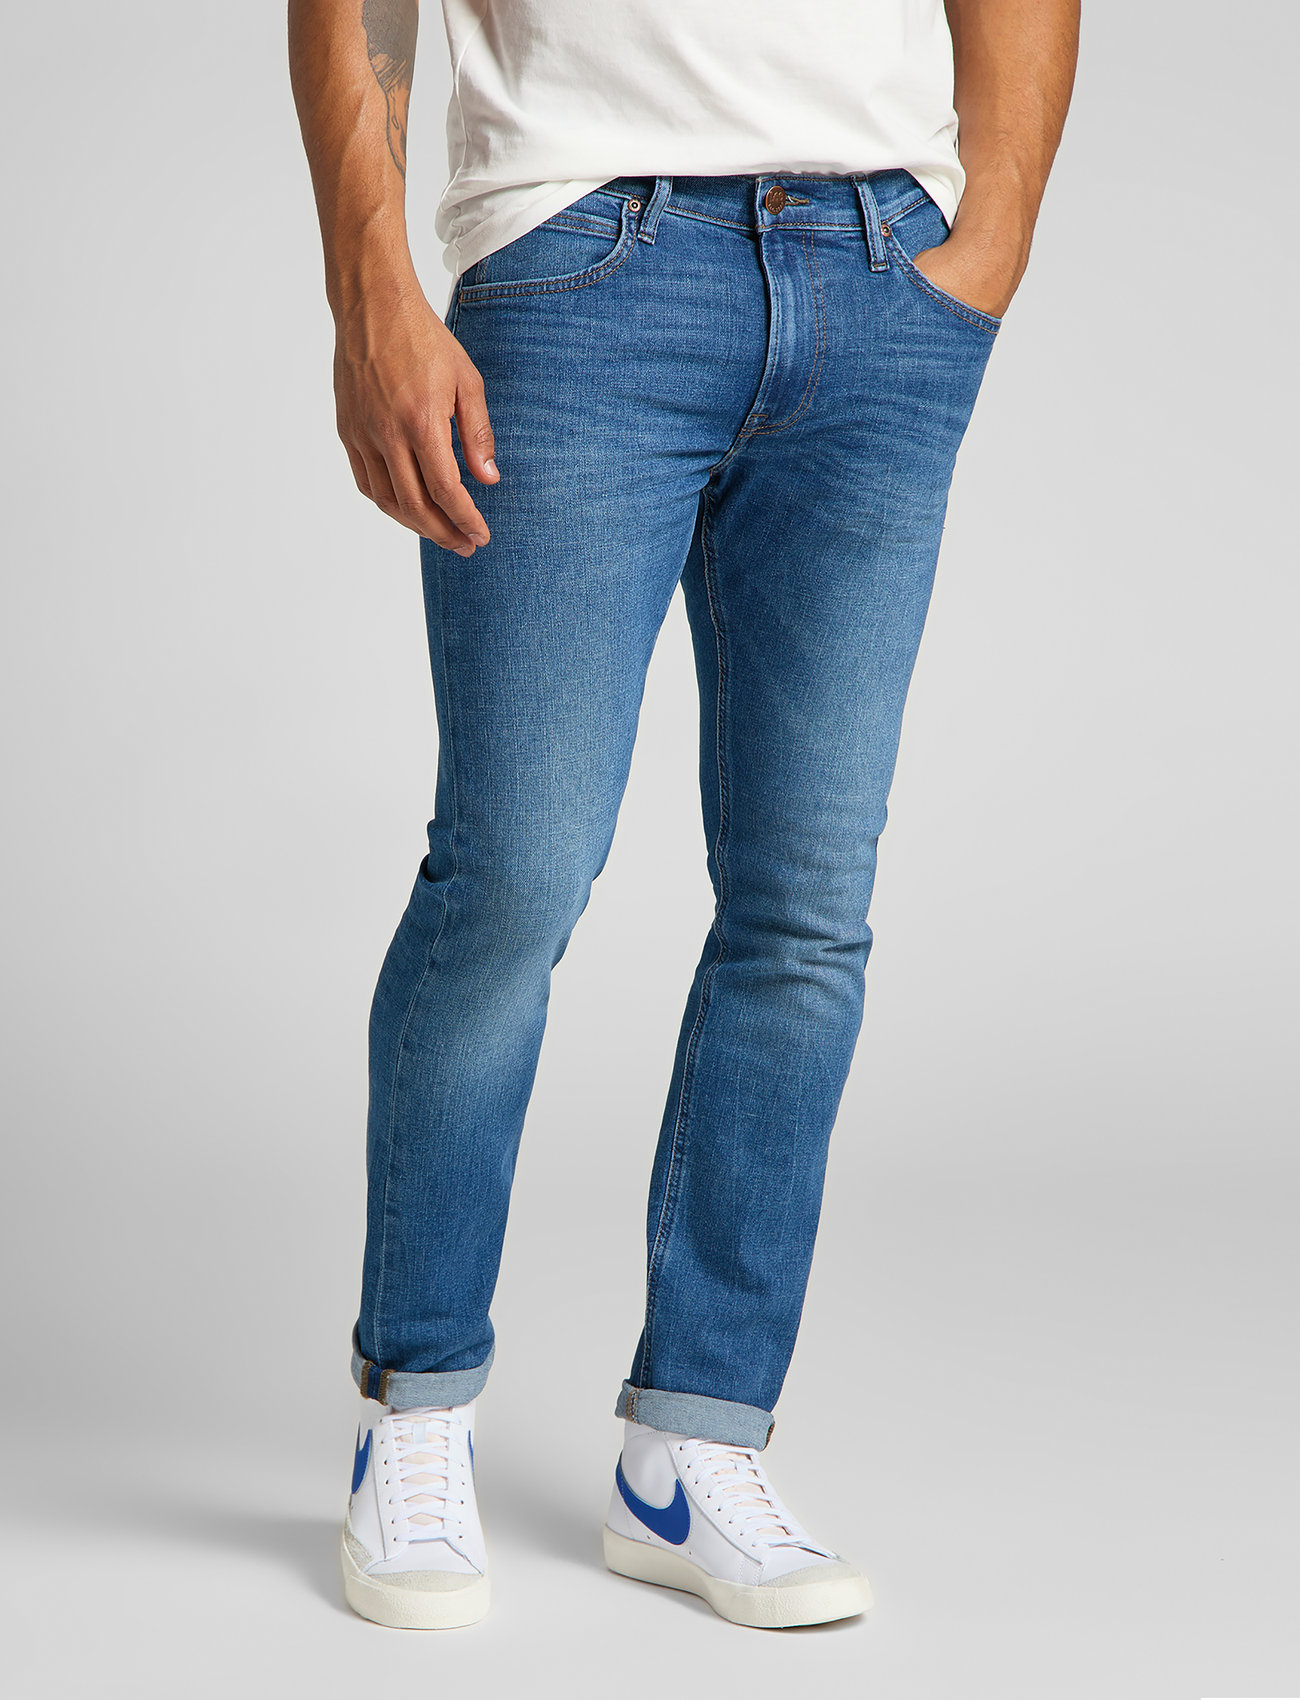 slack pulver kapok Lee Jeans Luke - Skinny jeans - Boozt.com